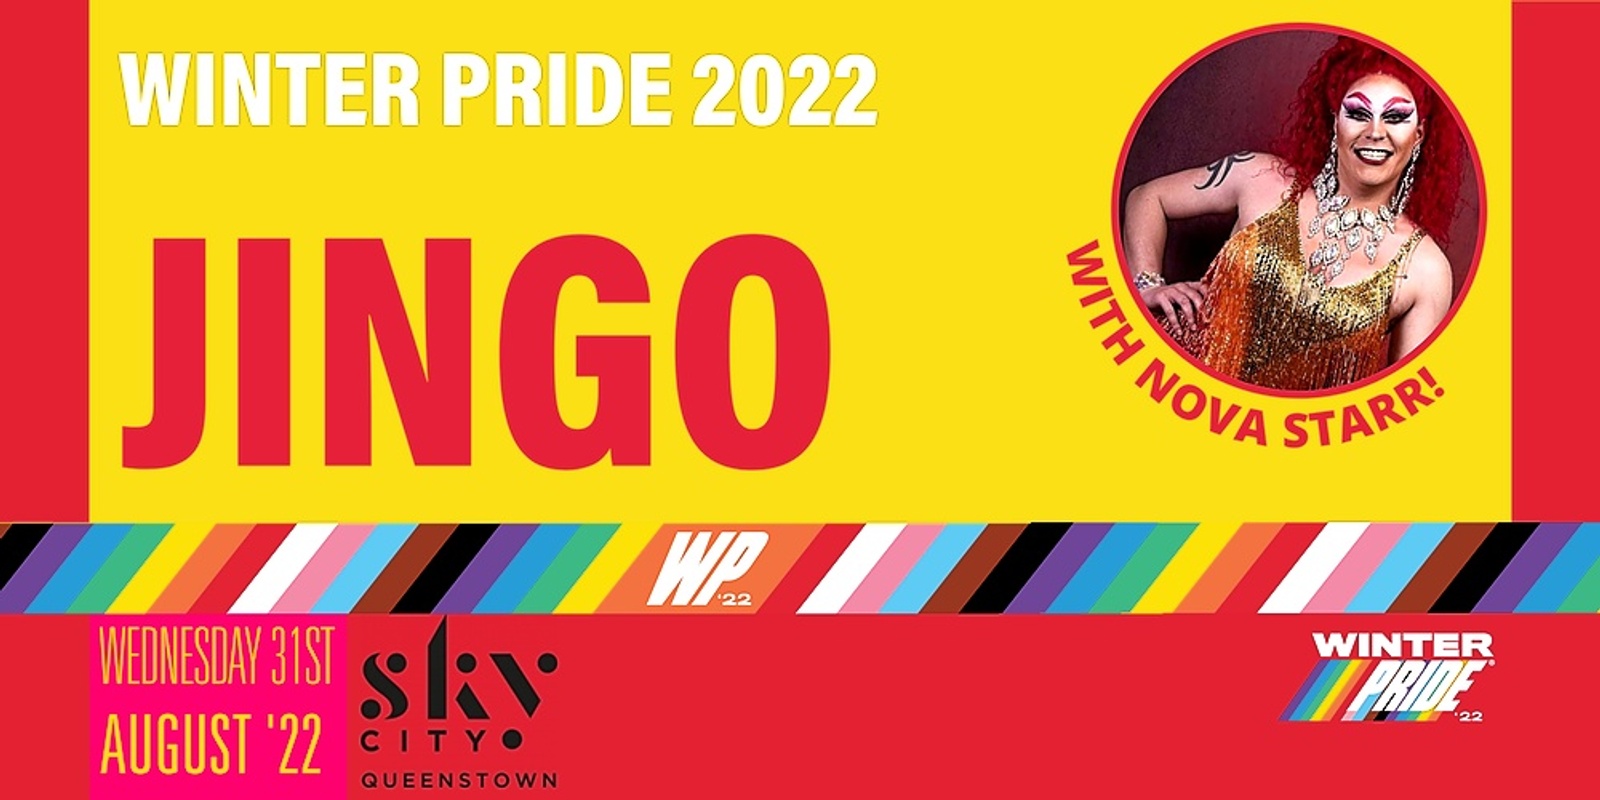 Banner image for Jingo with Nova Starr WP '22